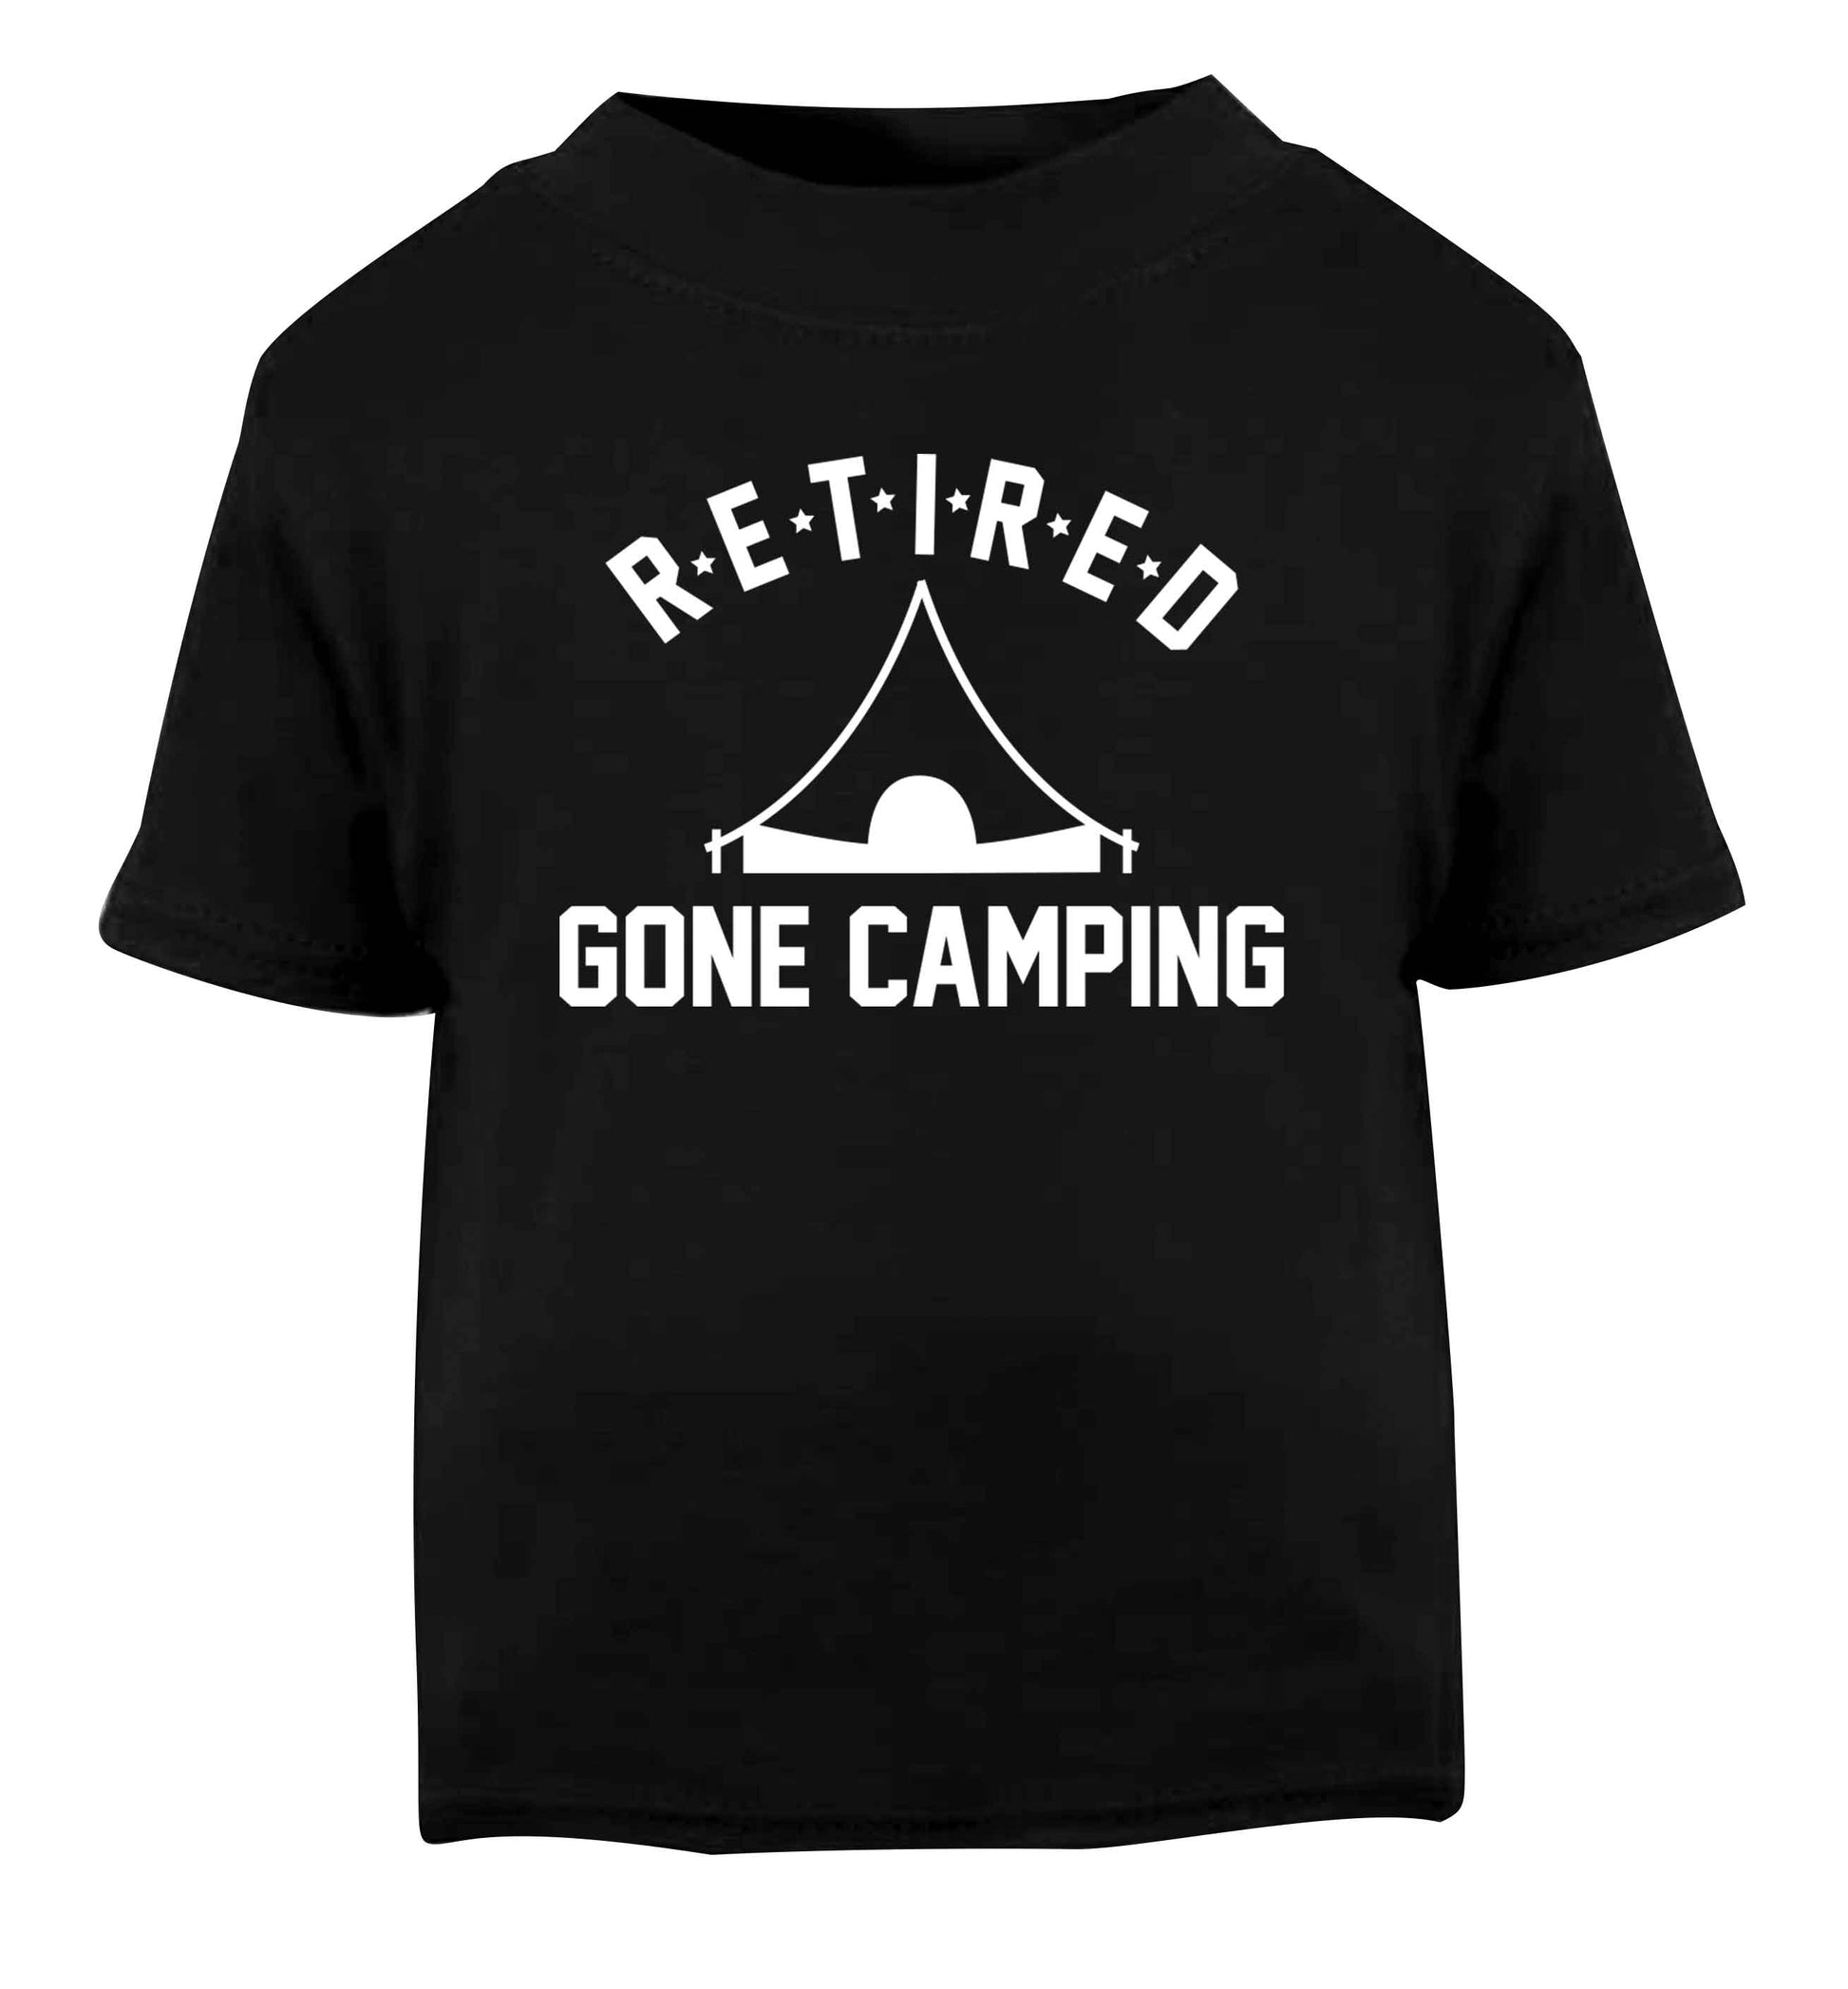 Retired gone camping Black Baby Toddler Tshirt 2 years